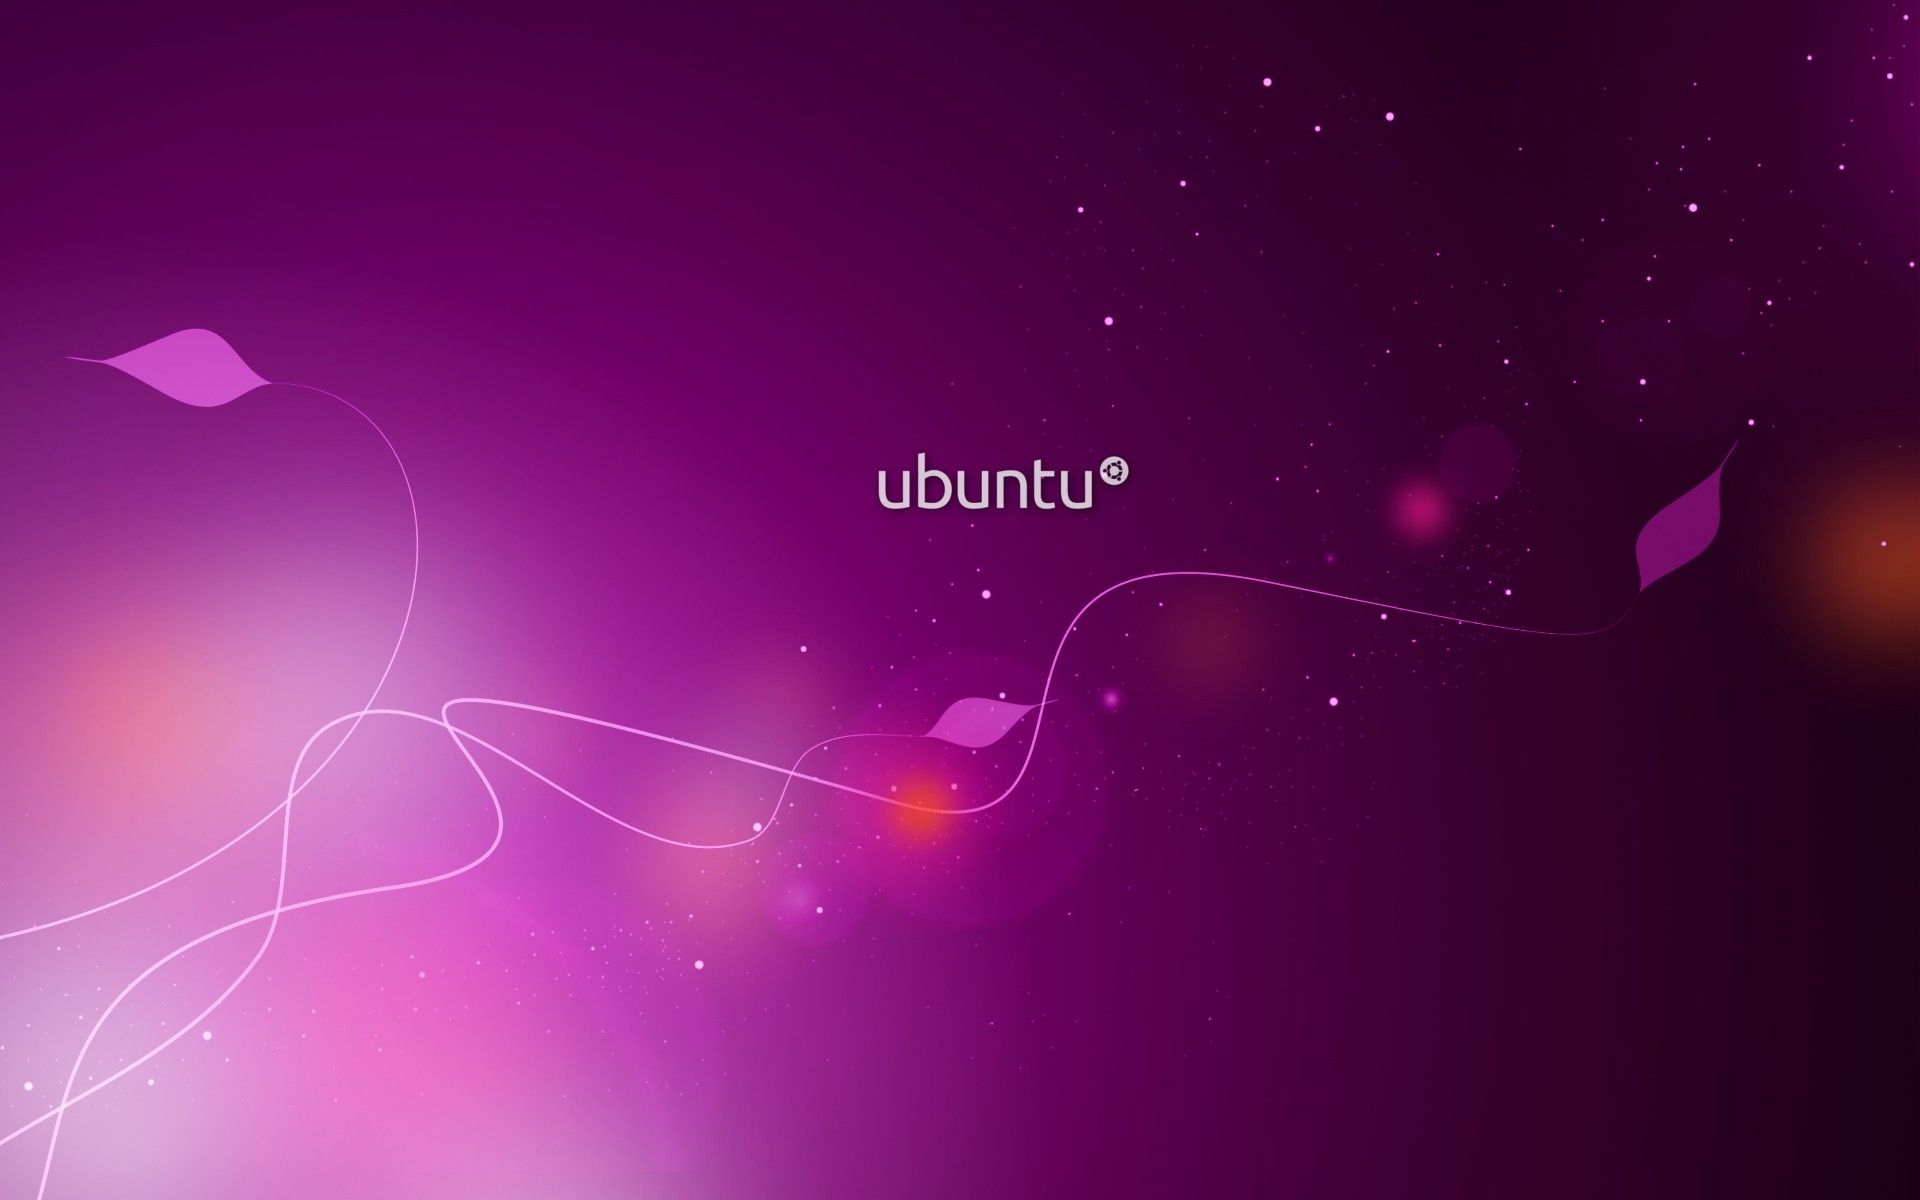 HD wallpaper, Desktop, Ubuntu, Background